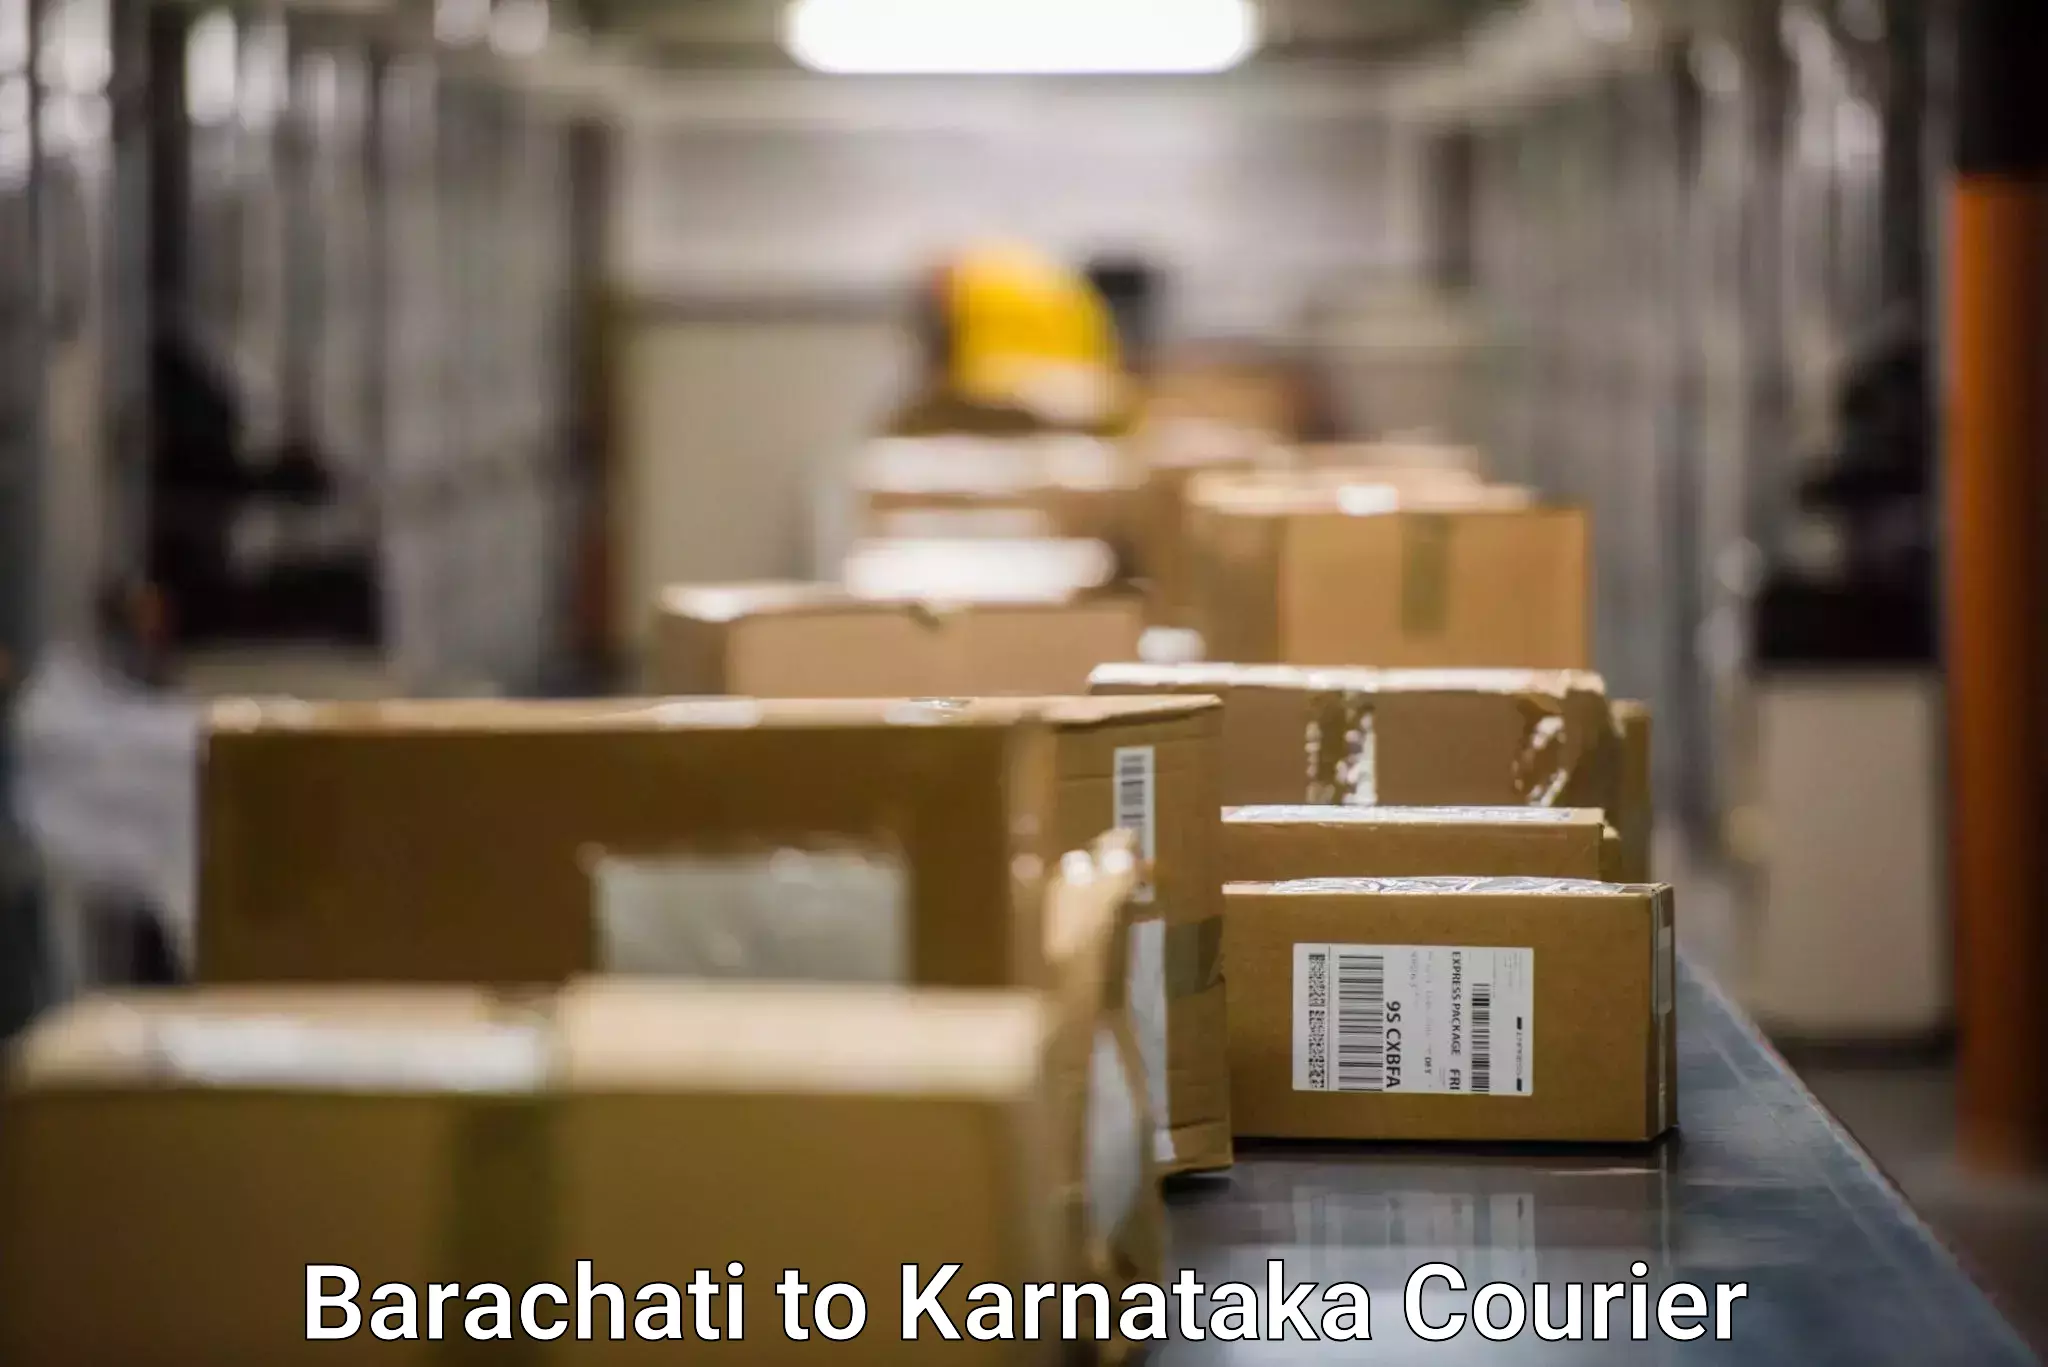 Courier service efficiency Barachati to Yenepoya Mangalore